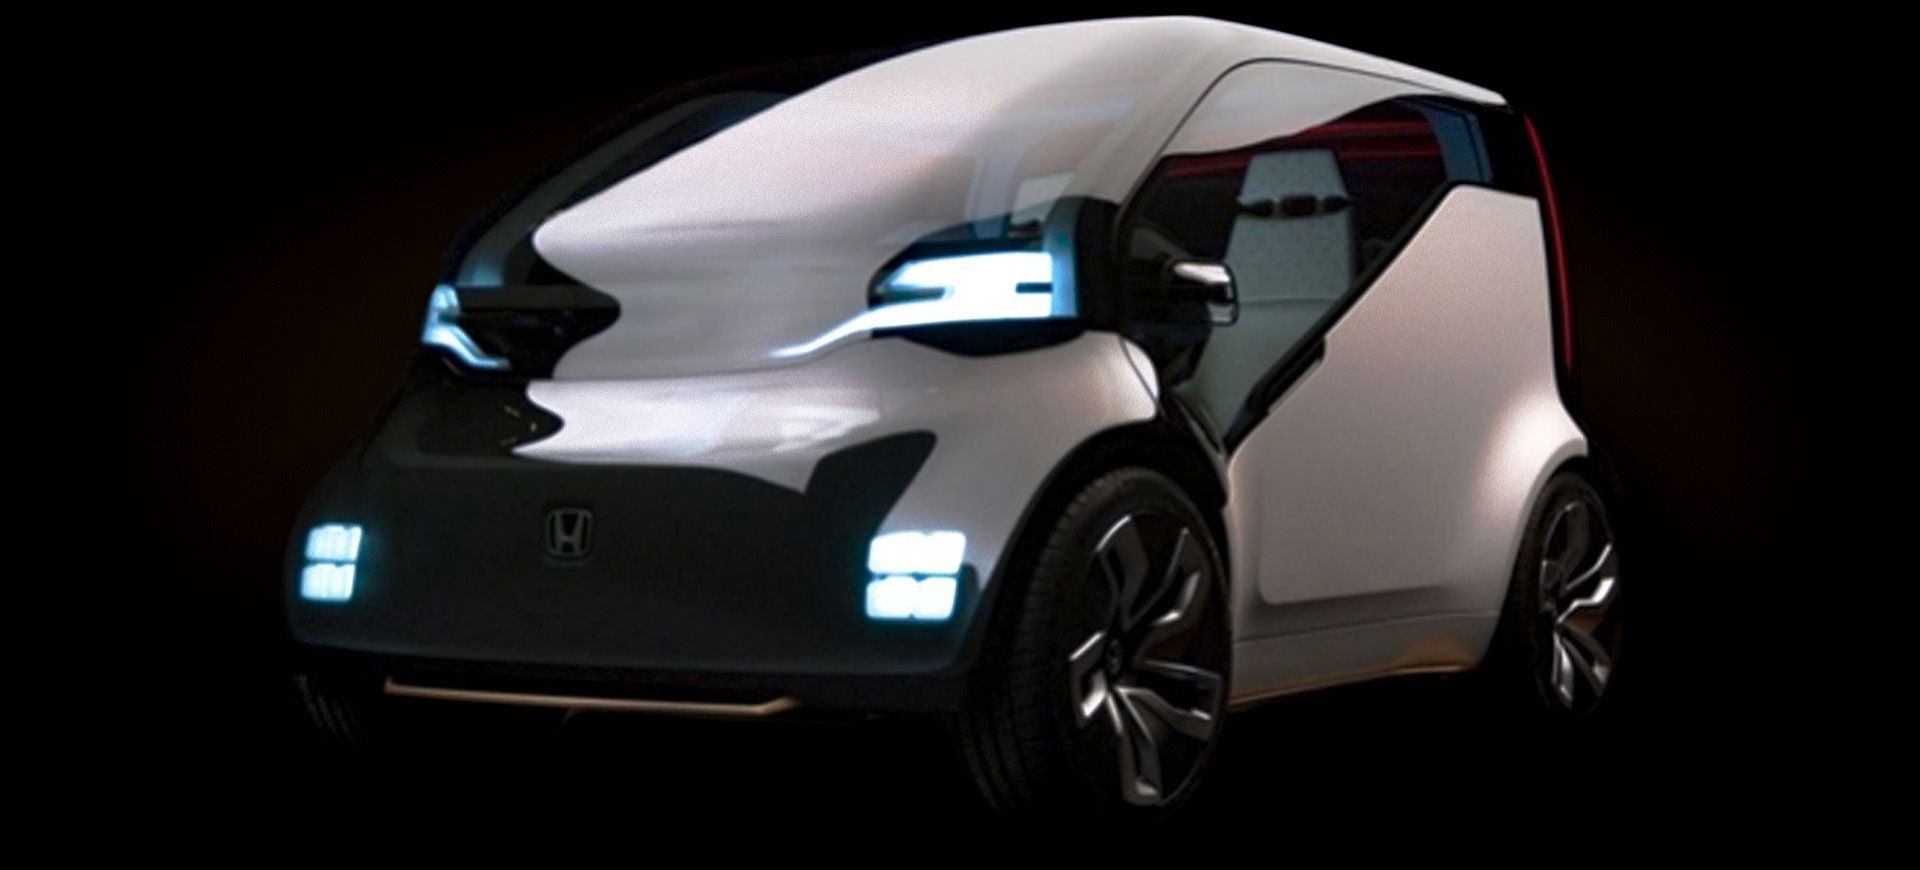 The New Honda Ride-Sharing Concept Car - The NeuV